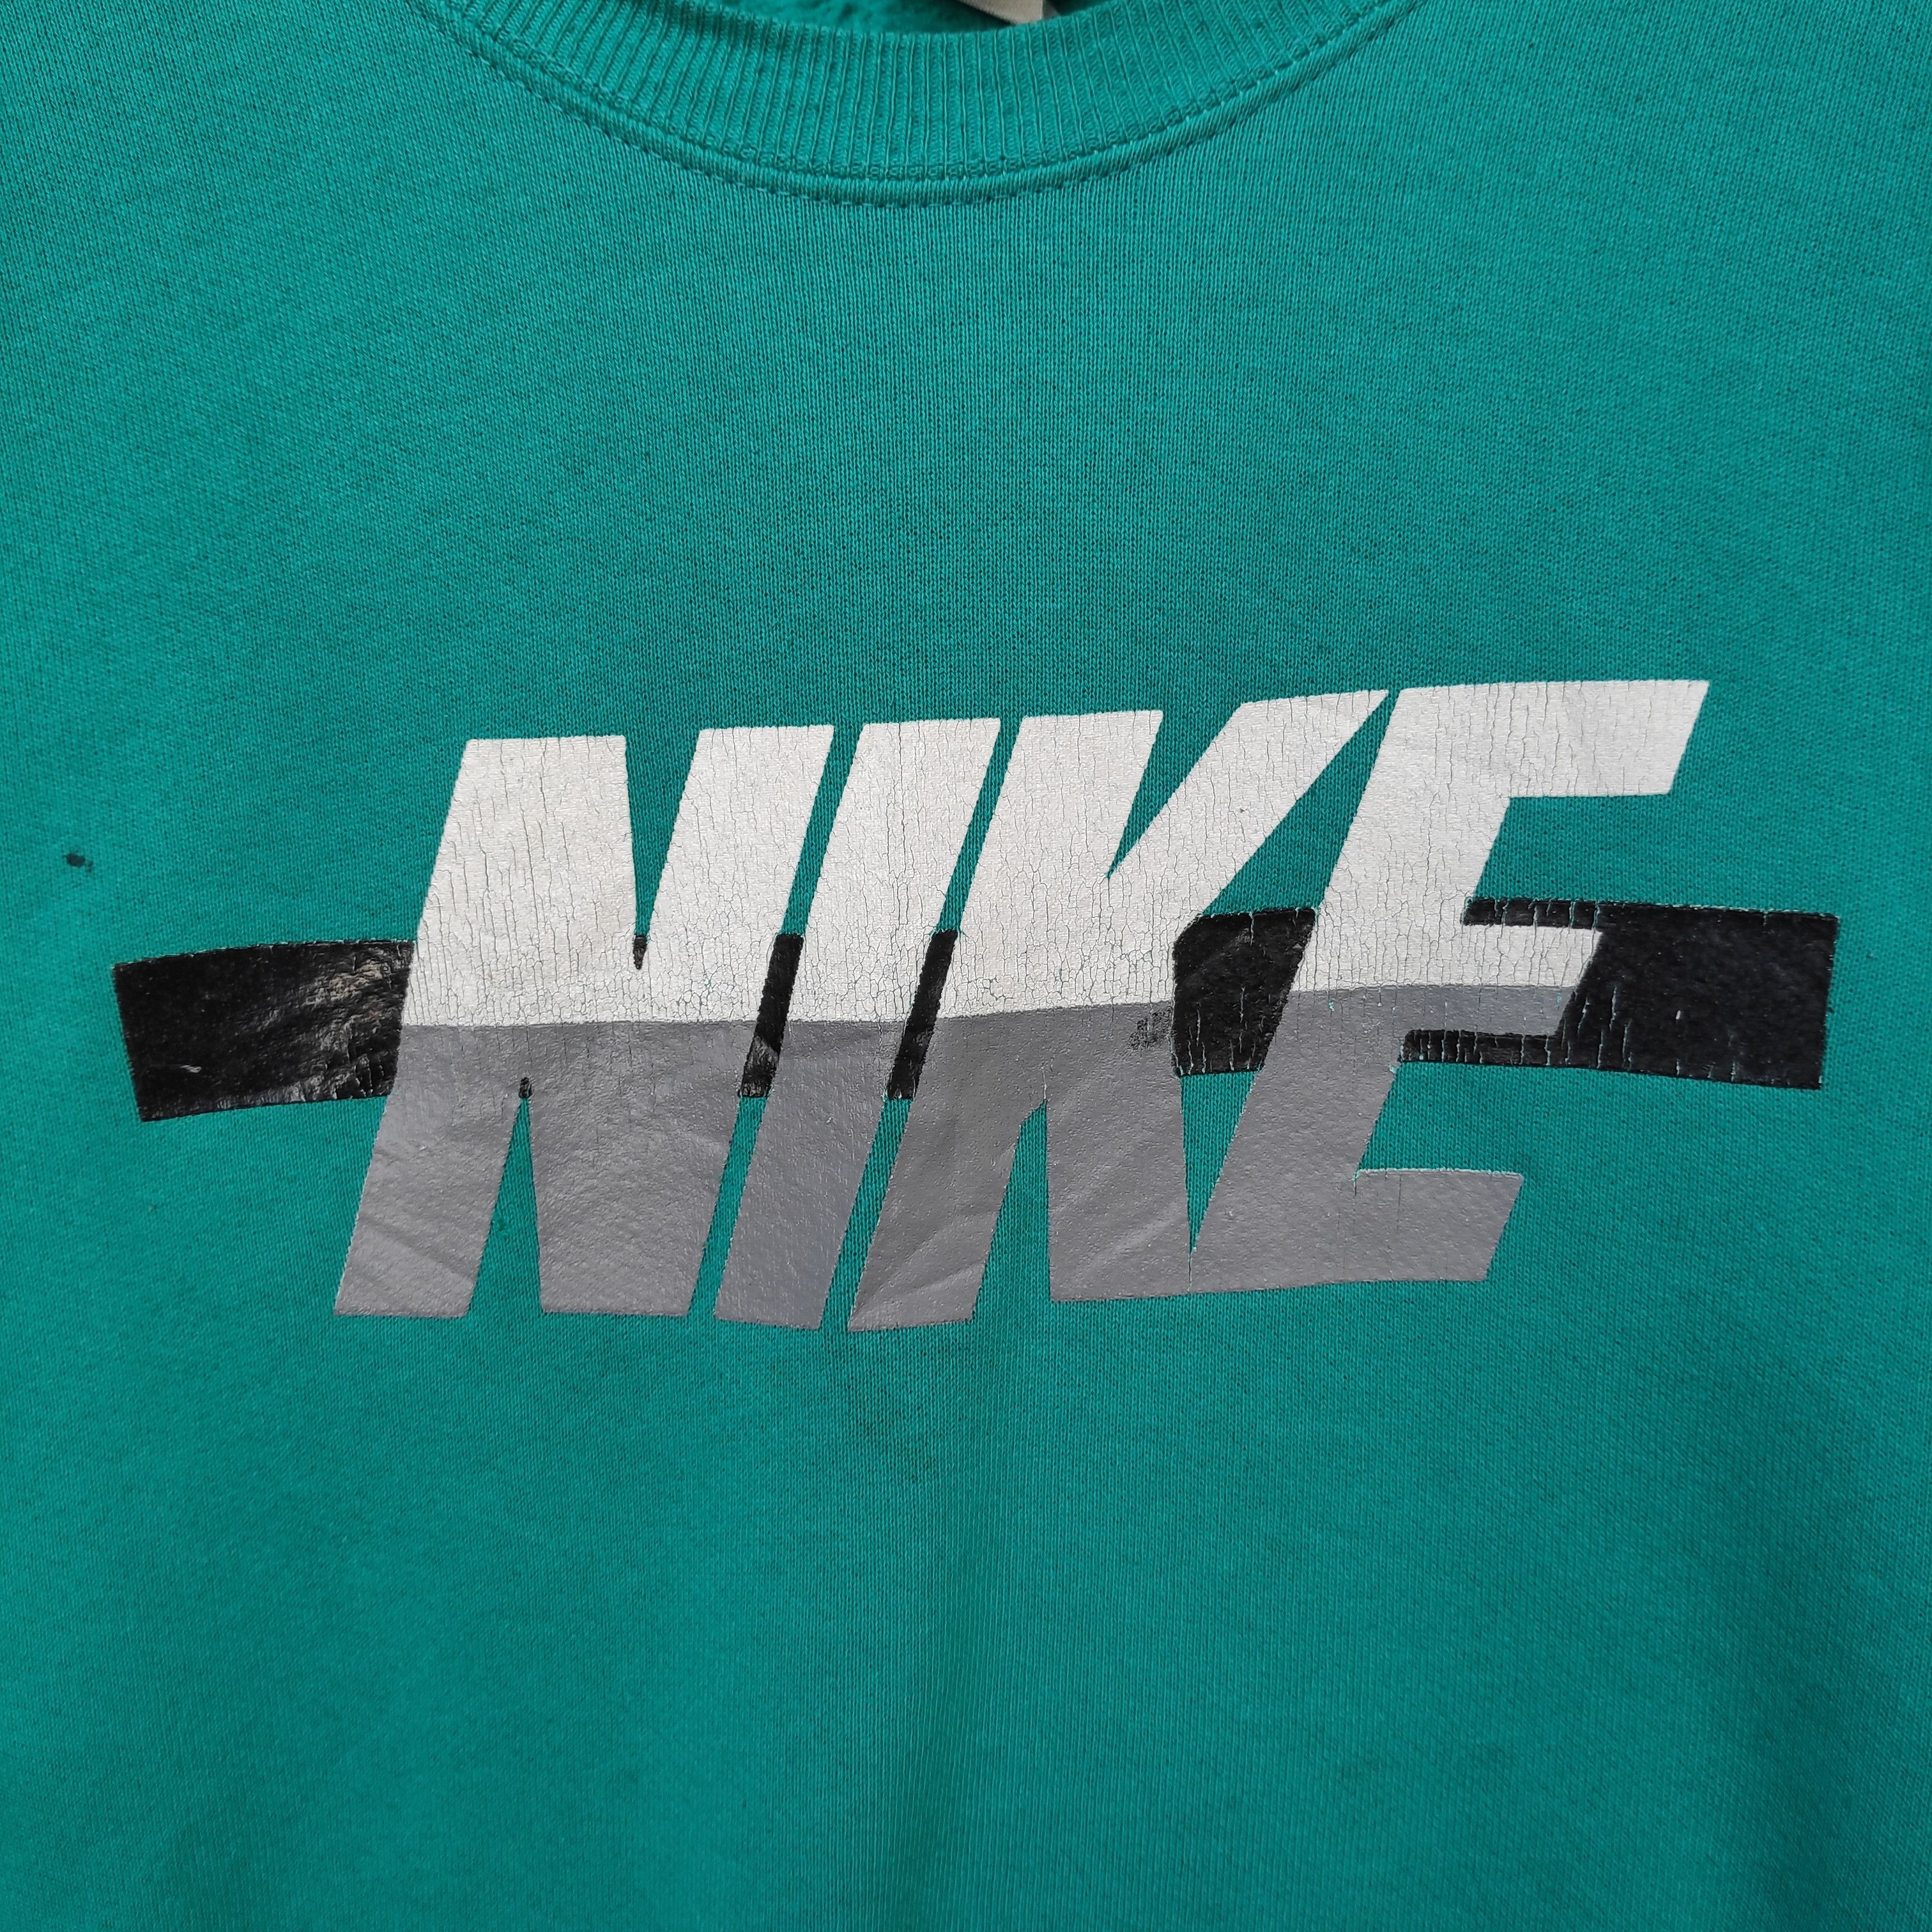 Nike Vintage Nike Sweatshirt Large Green Dope 90s Streetwear Size US L / EU 52-54 / 3 - 5 Thumbnail